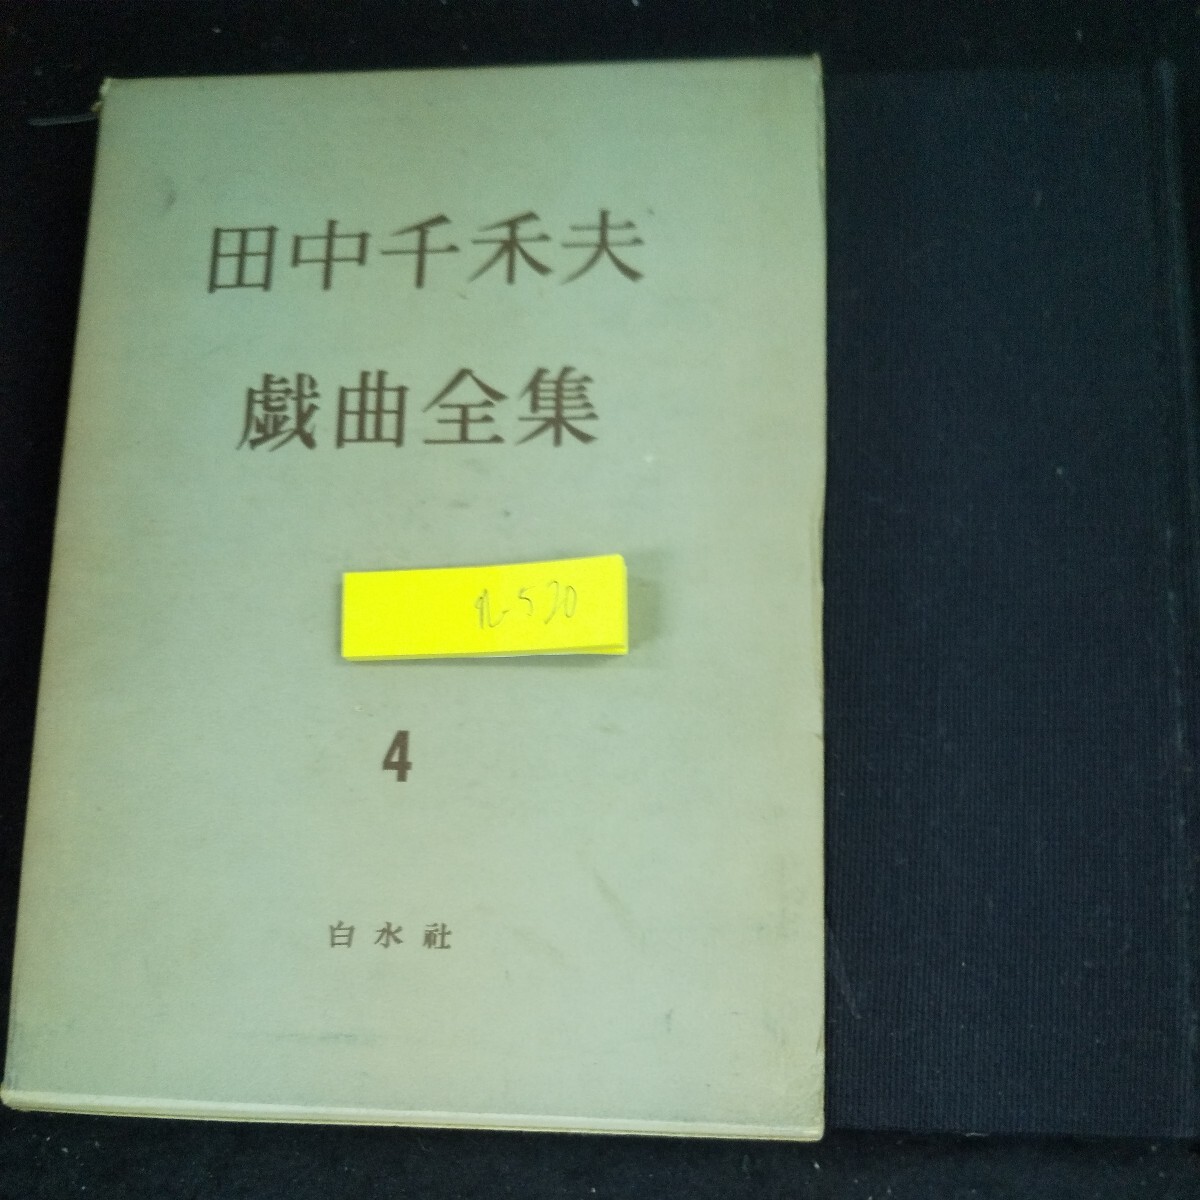 N-520 Chikao Tanaka Play Complete Works 4 Hakusuishisha Опубликована в 1960 году Джула Шура Фудо Фудоки Спинку Сон Сон 8-ступенчатый комментарий * 10